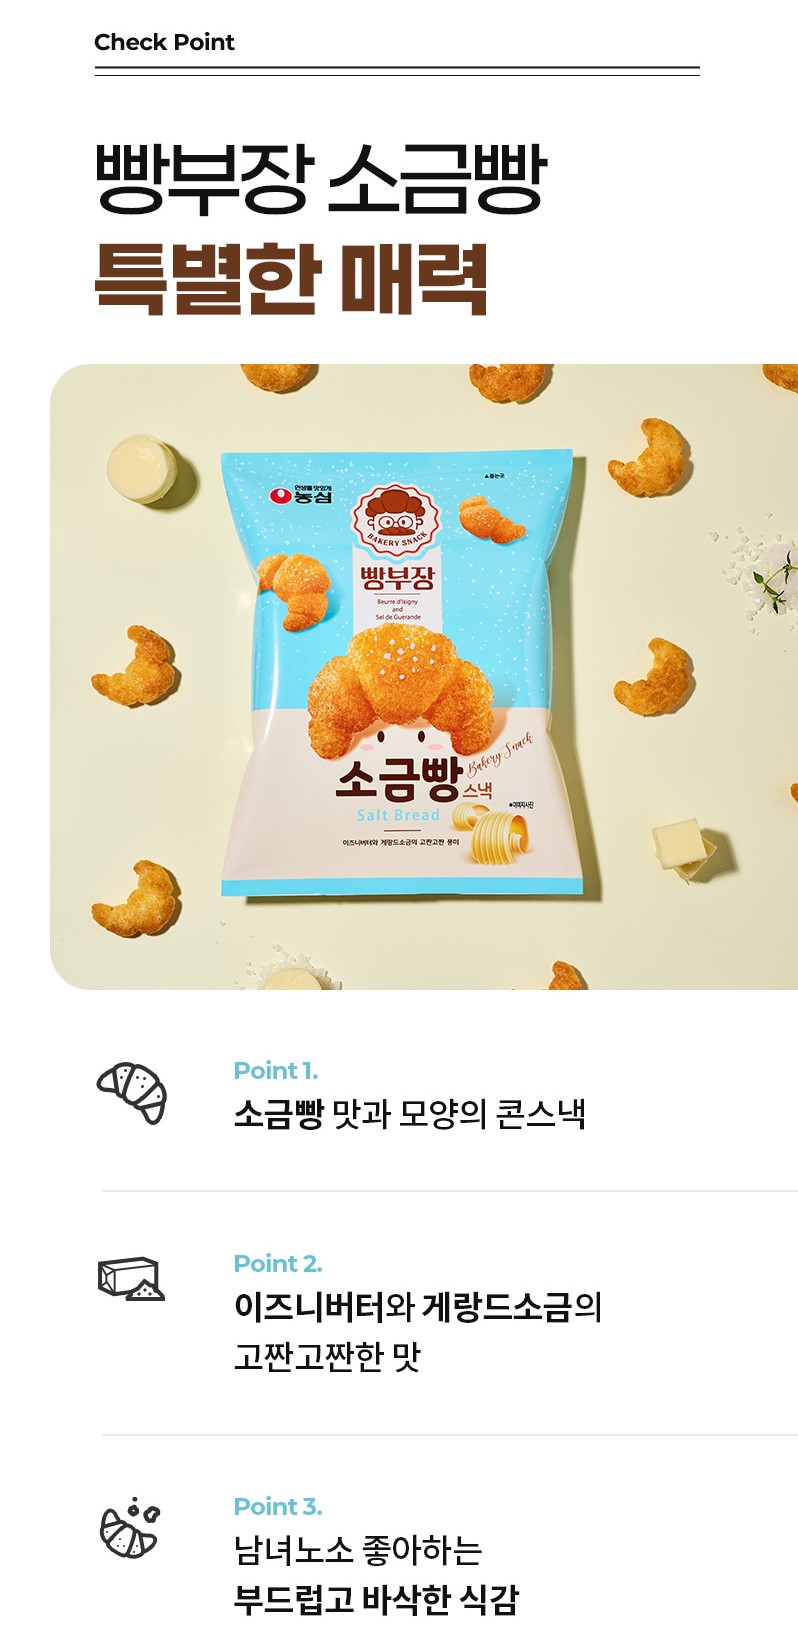 韓國食品-[Nongshim] Salt Bread Snack 55g